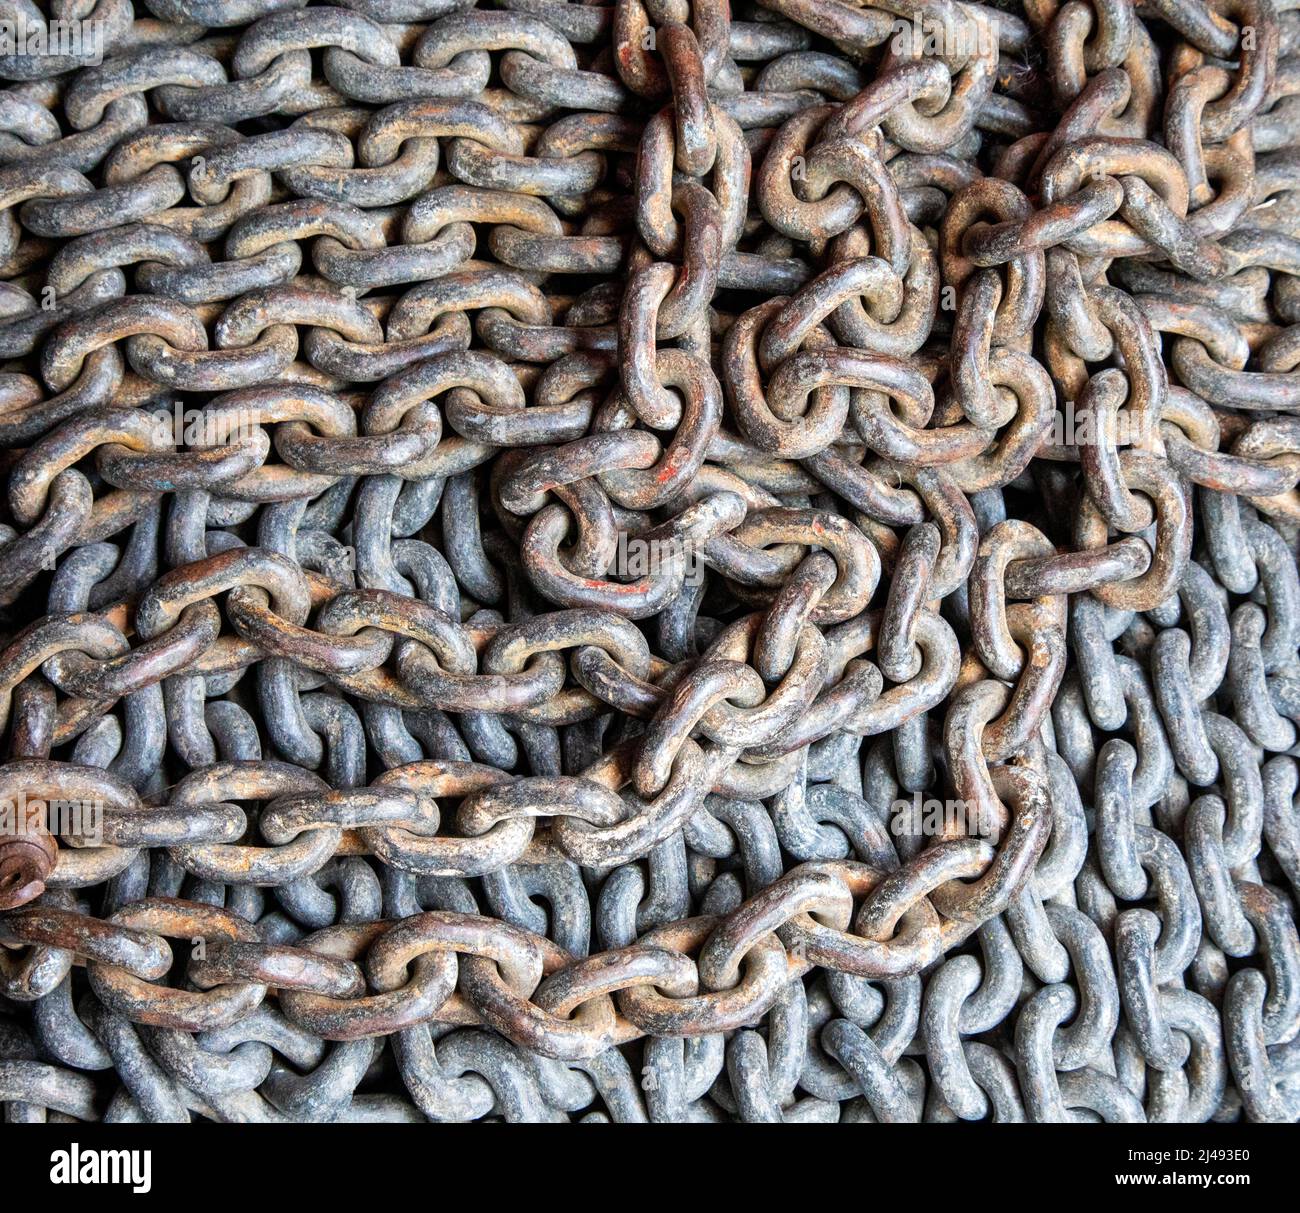 Chains. Stock Photo